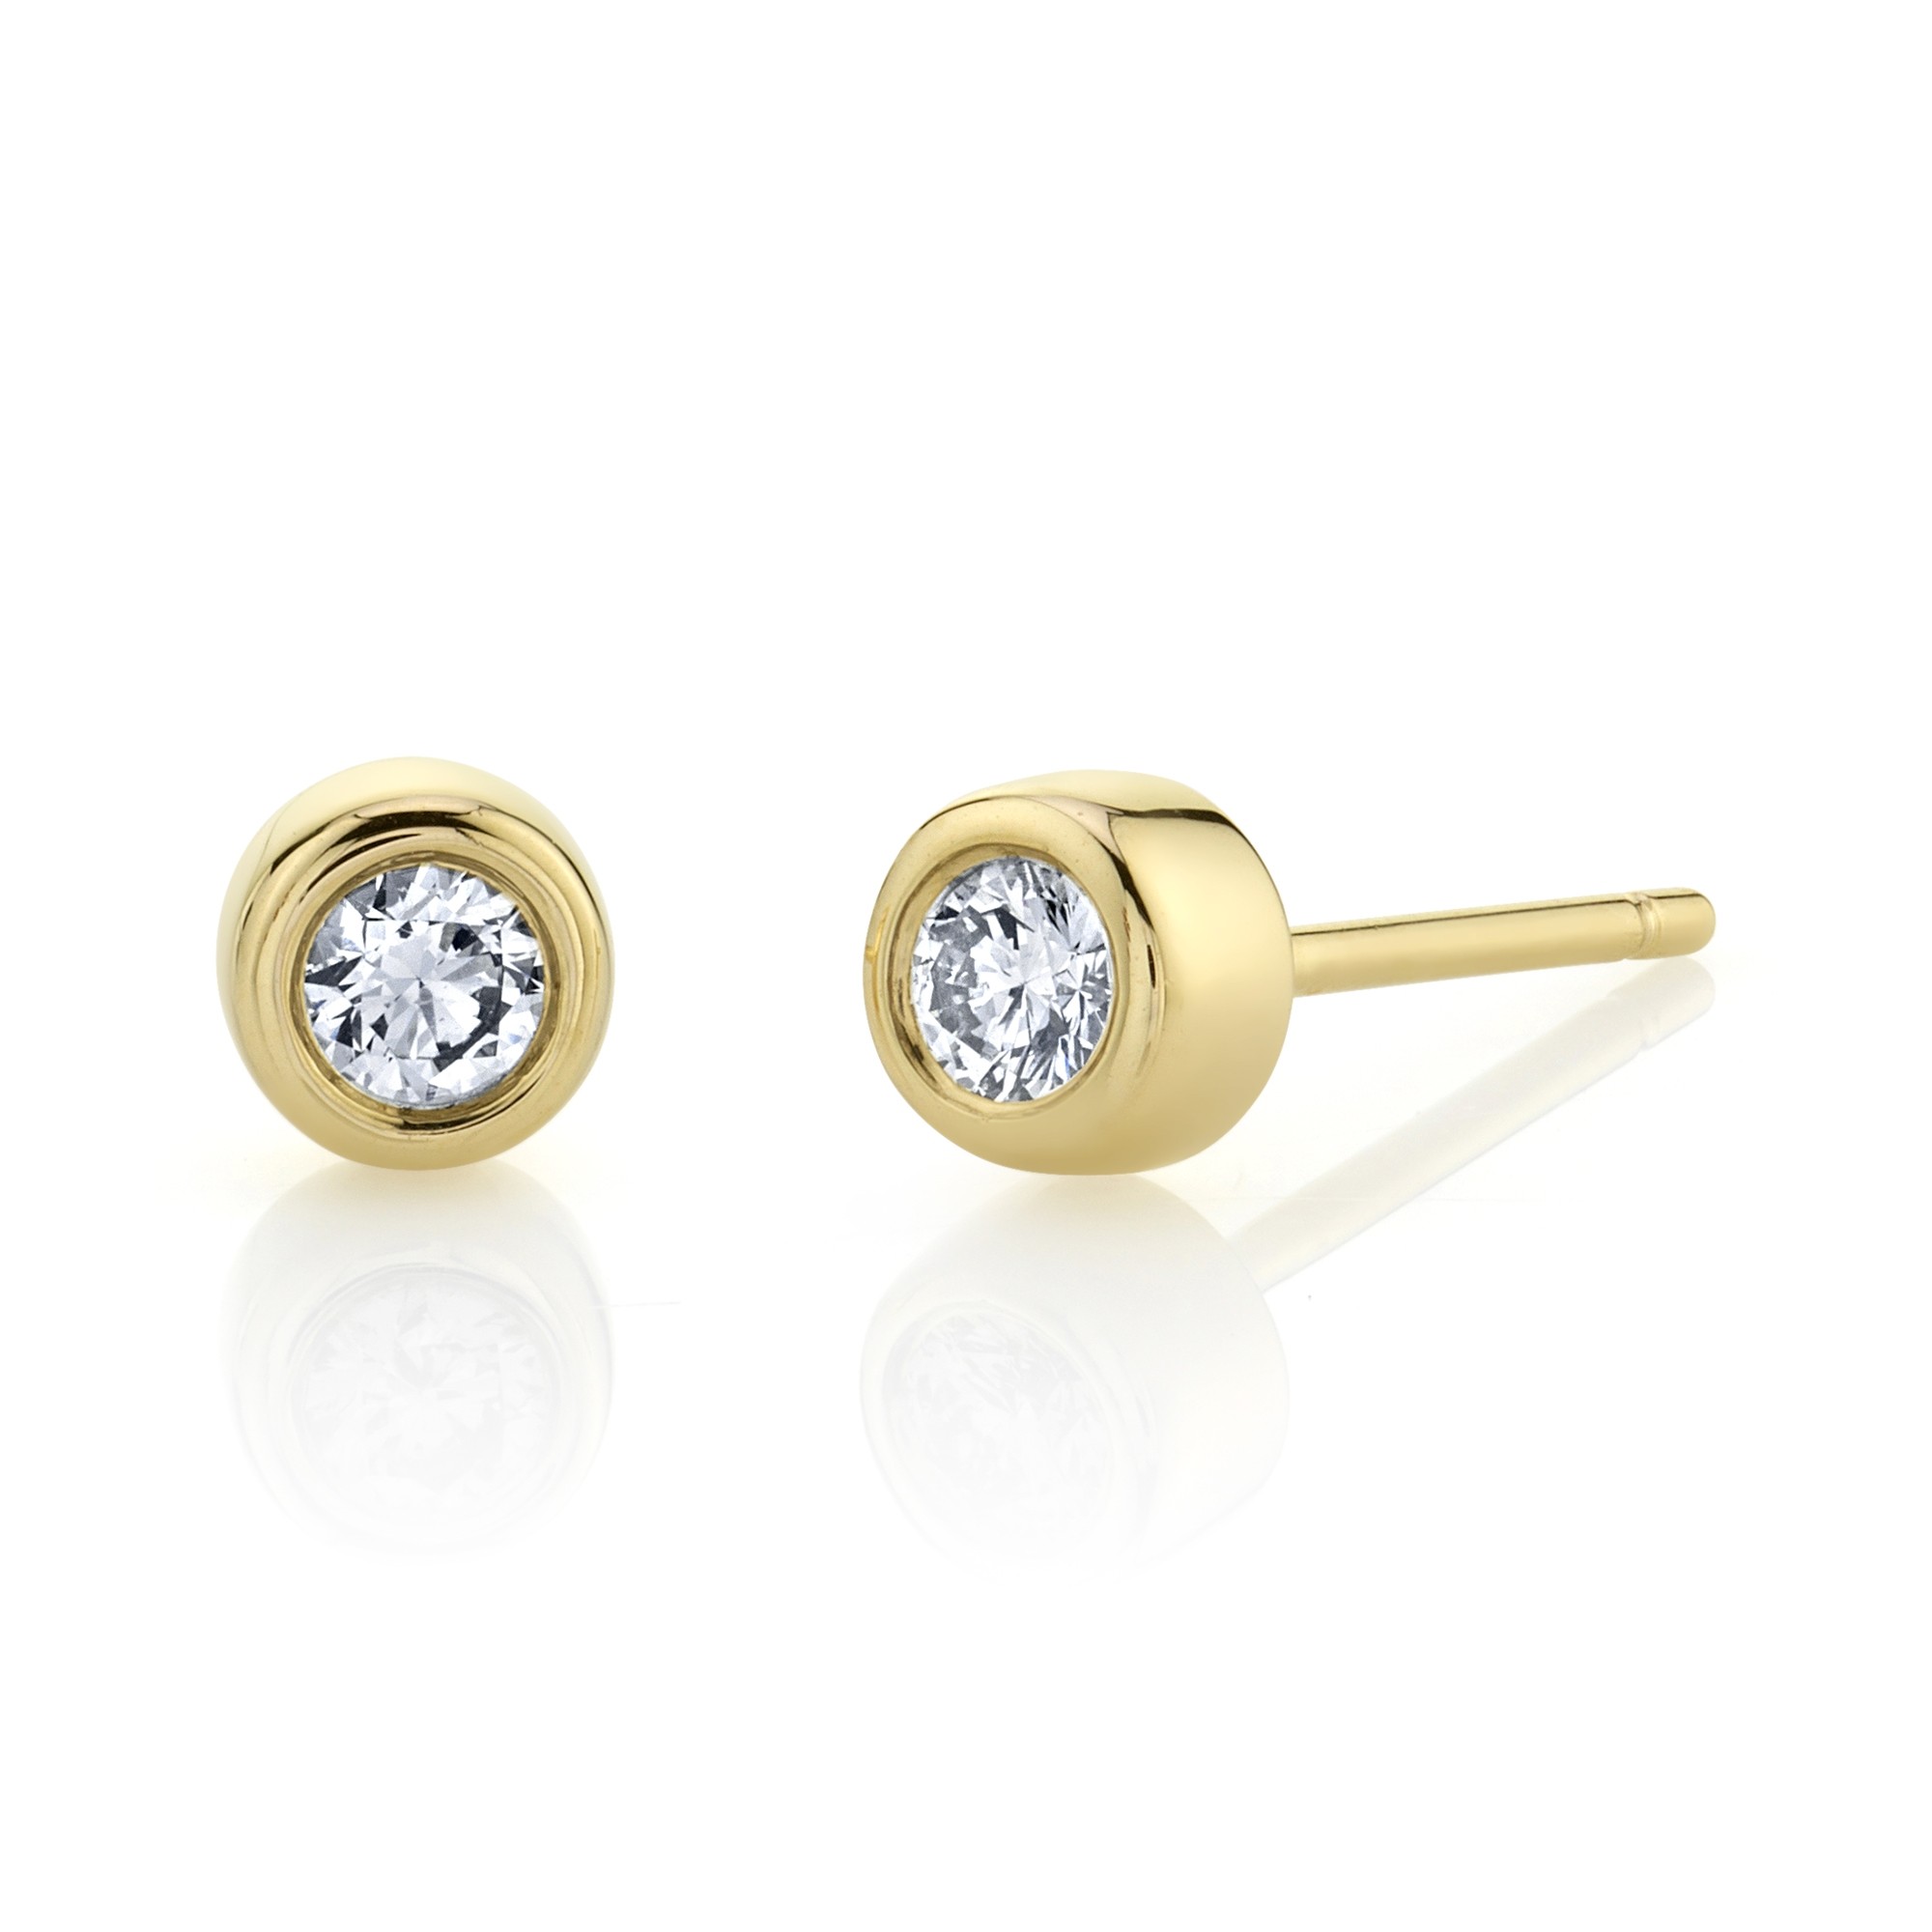 Buy quality Dainty diamond stud earrings in 14k rose gold in Pune